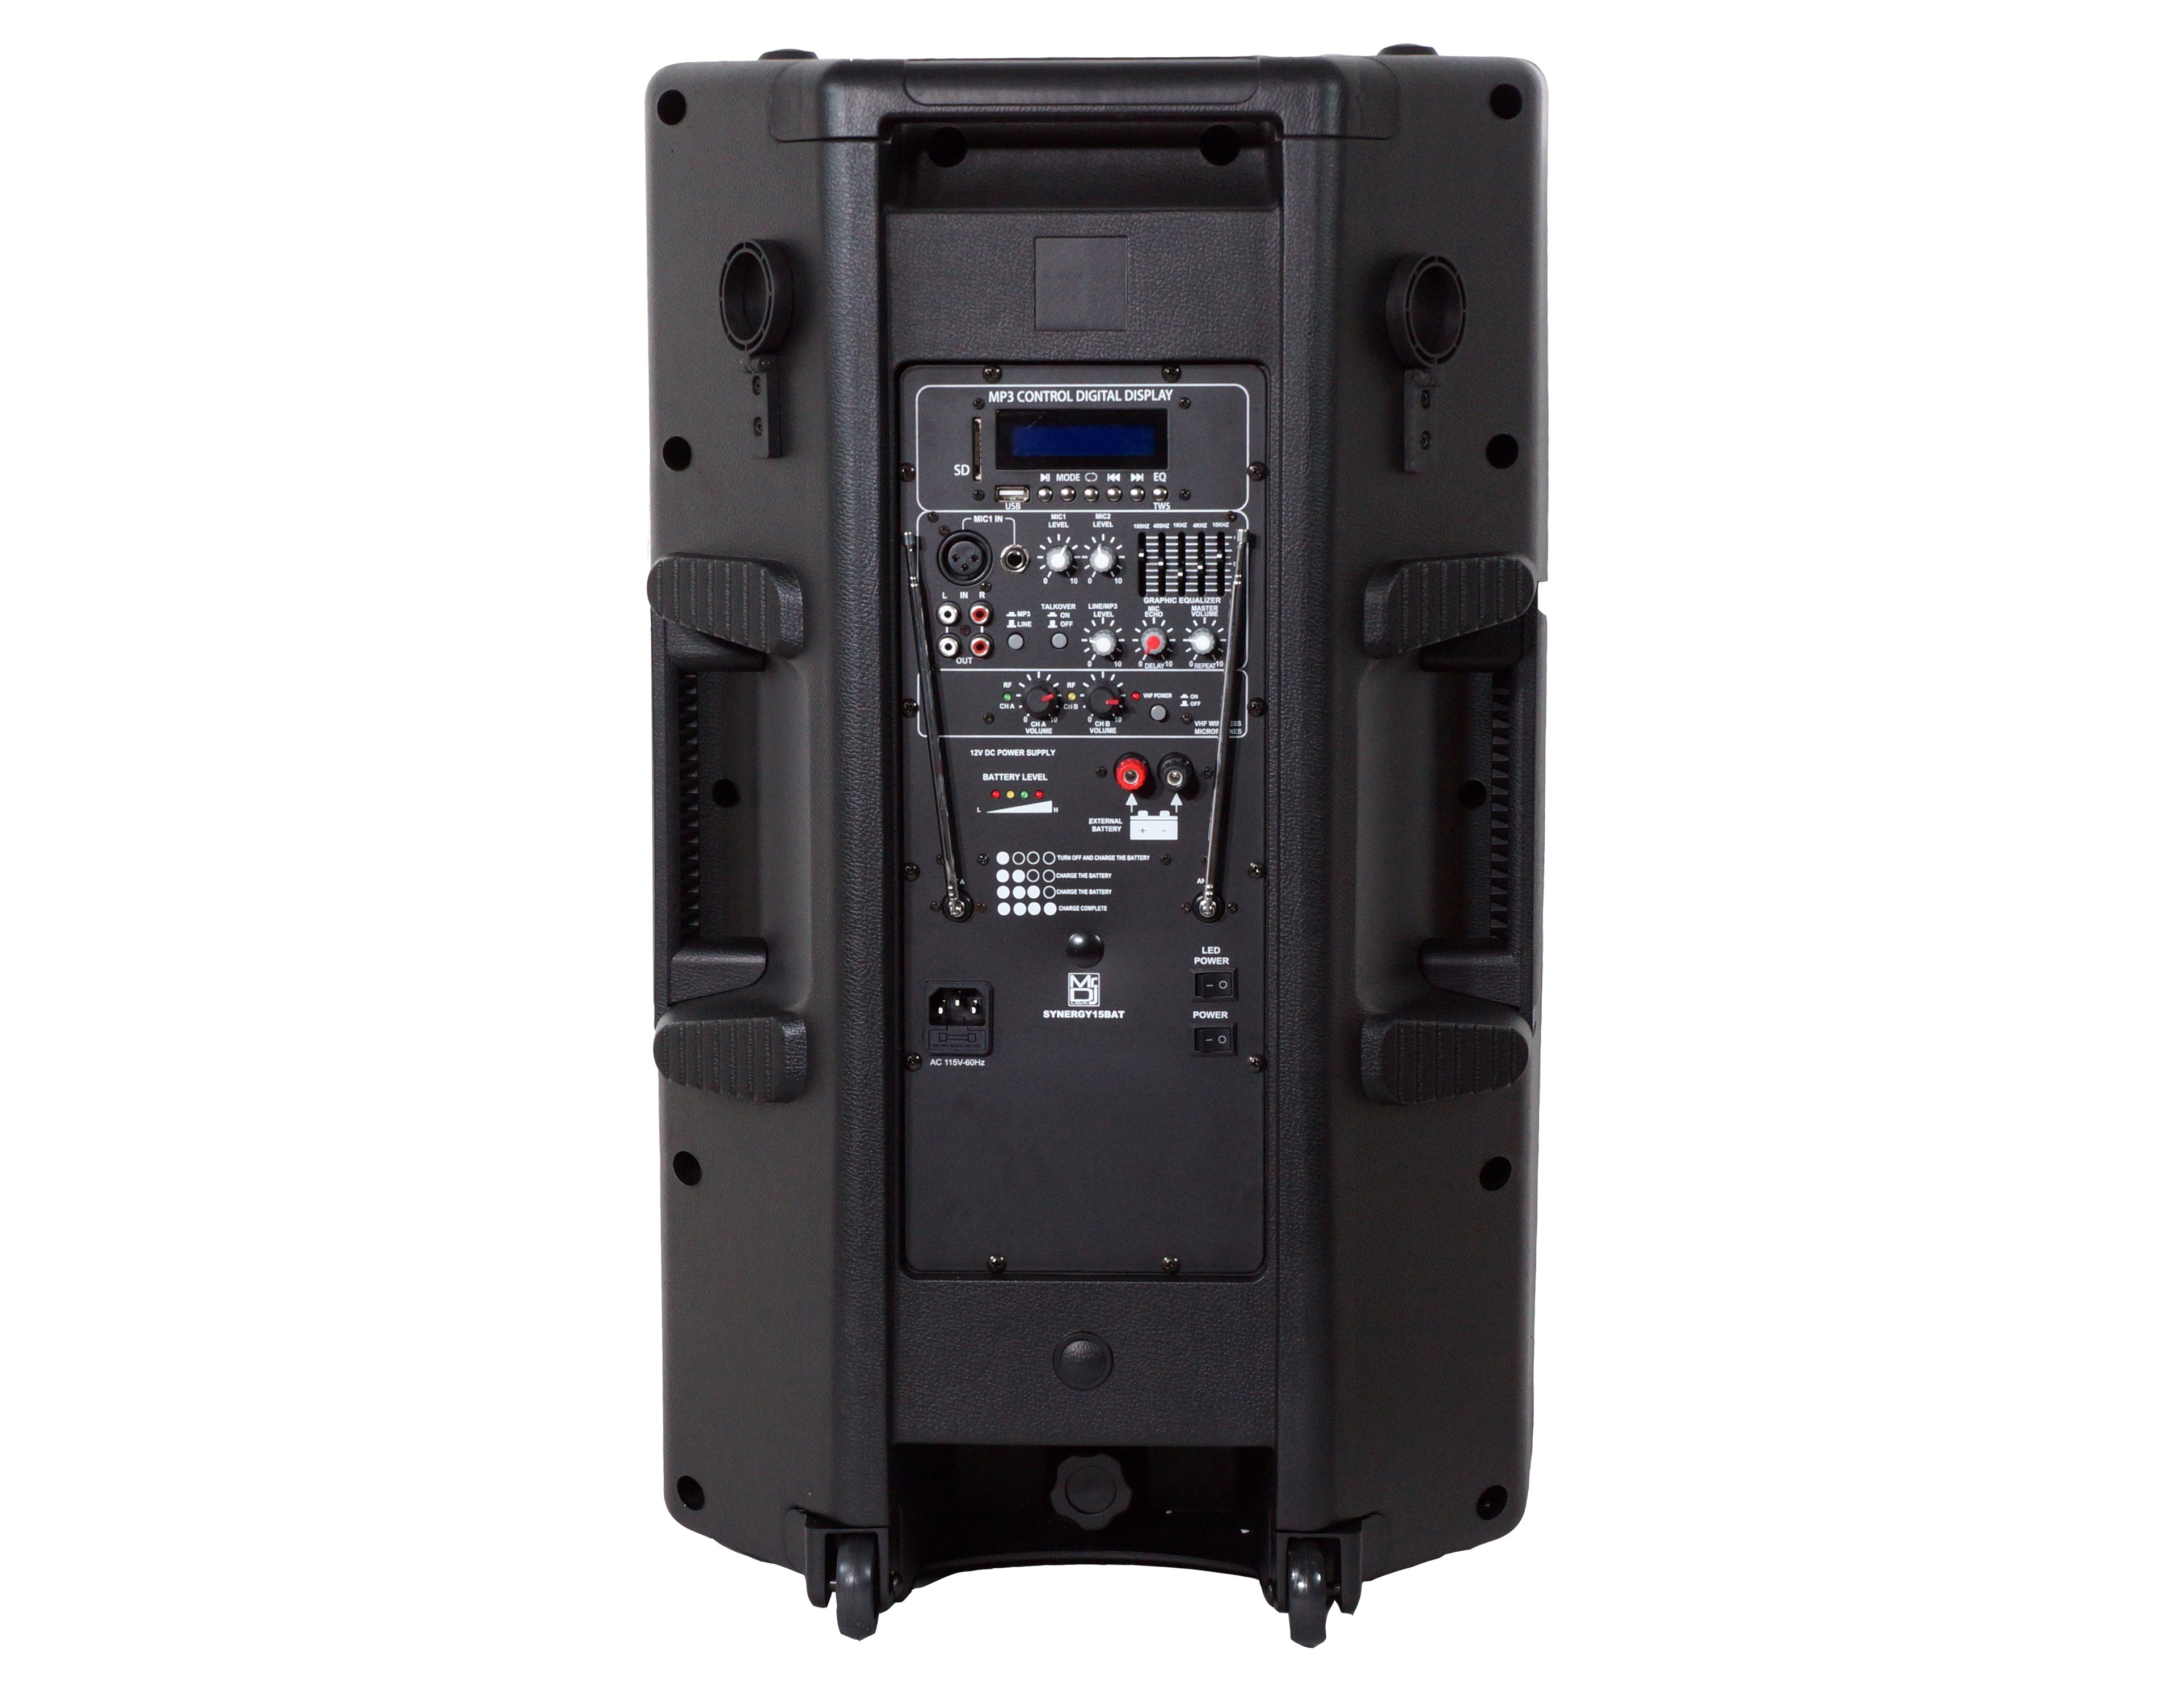 MR DJ SYNERGY15BAT 15" 3500 Watts Max Power Speaker Built-in Battery/Bluetooth/Amplifier/SD/USB/FM Radio